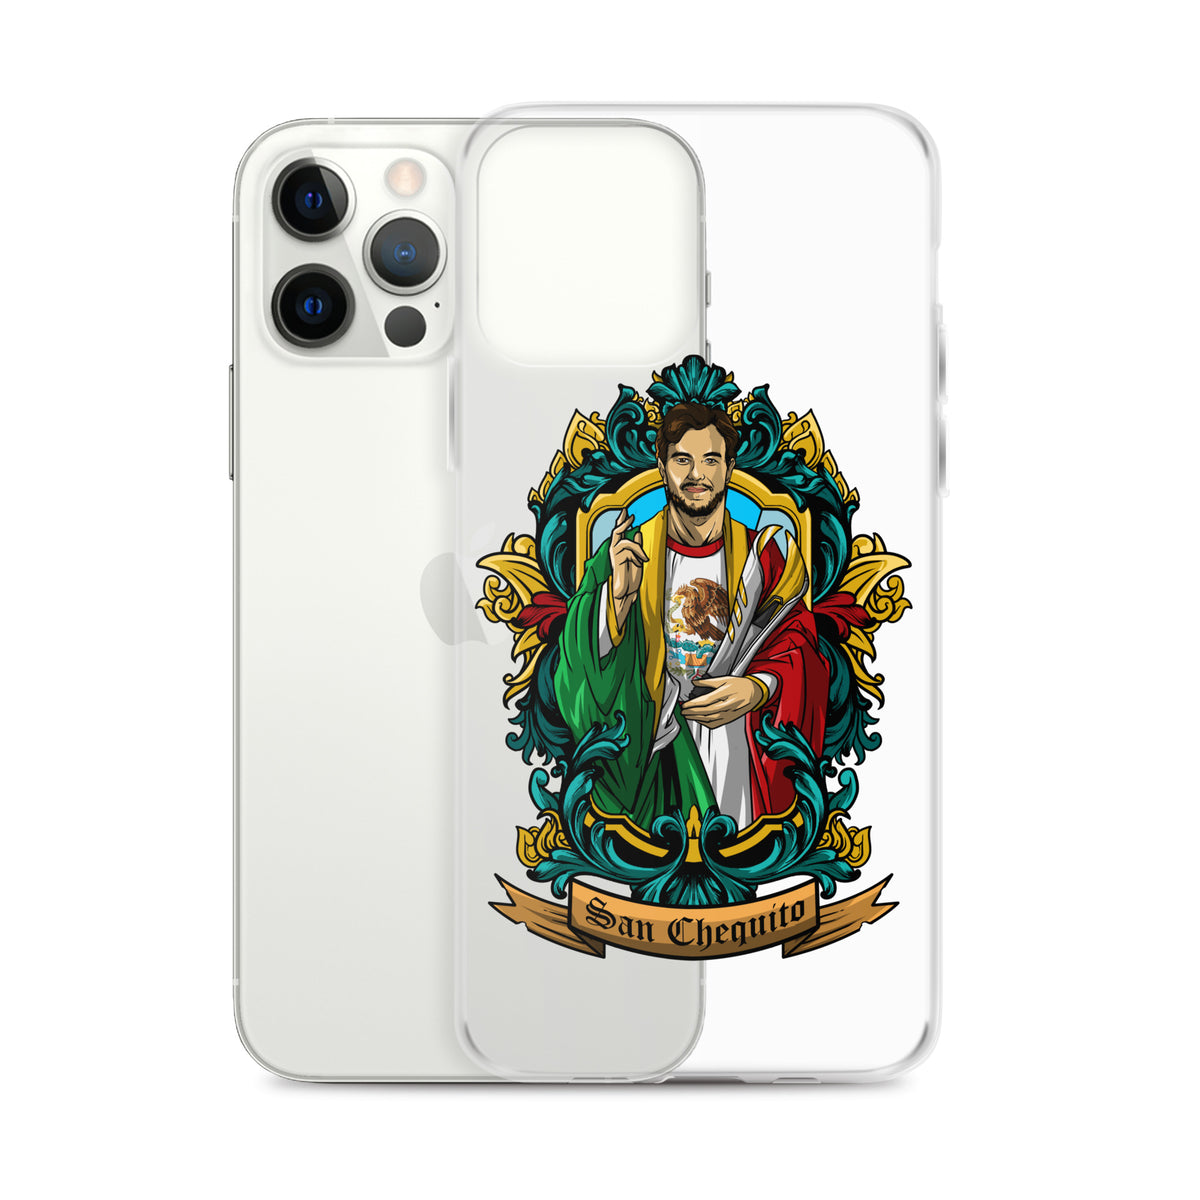 Case para iPhone - San Chequito Deluxe